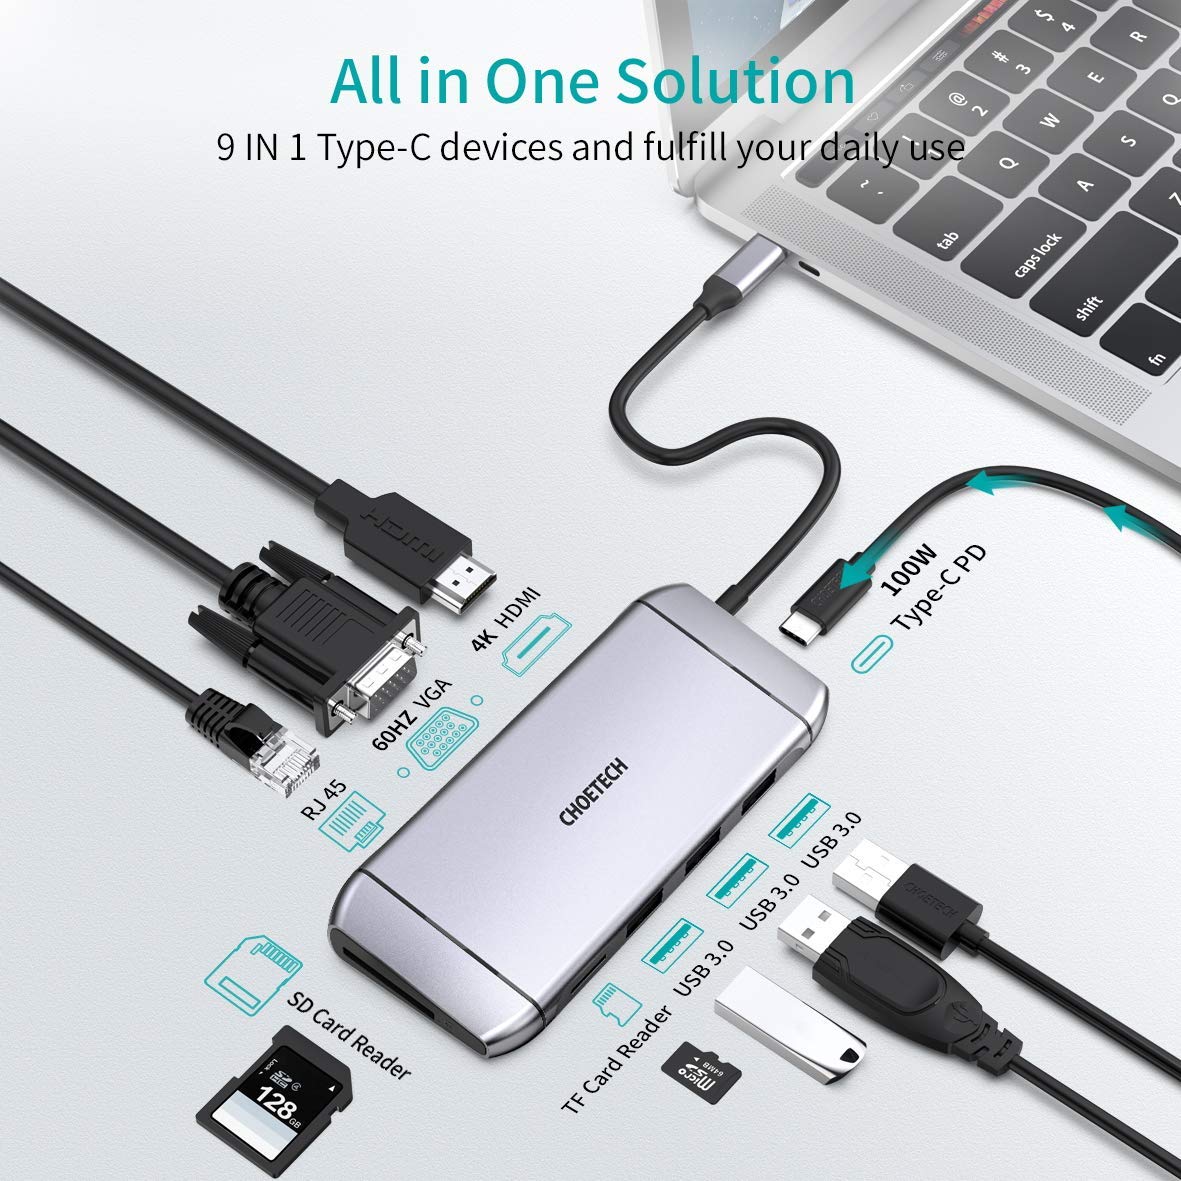 HUB-M15 9 in 1 USB C Adapter Hub with 4K HDMI, 100W PD Power,3 USB 3.0, RJ45 Ethernet, 60HZ VGA, SD/TF Card Reader CHOETECH